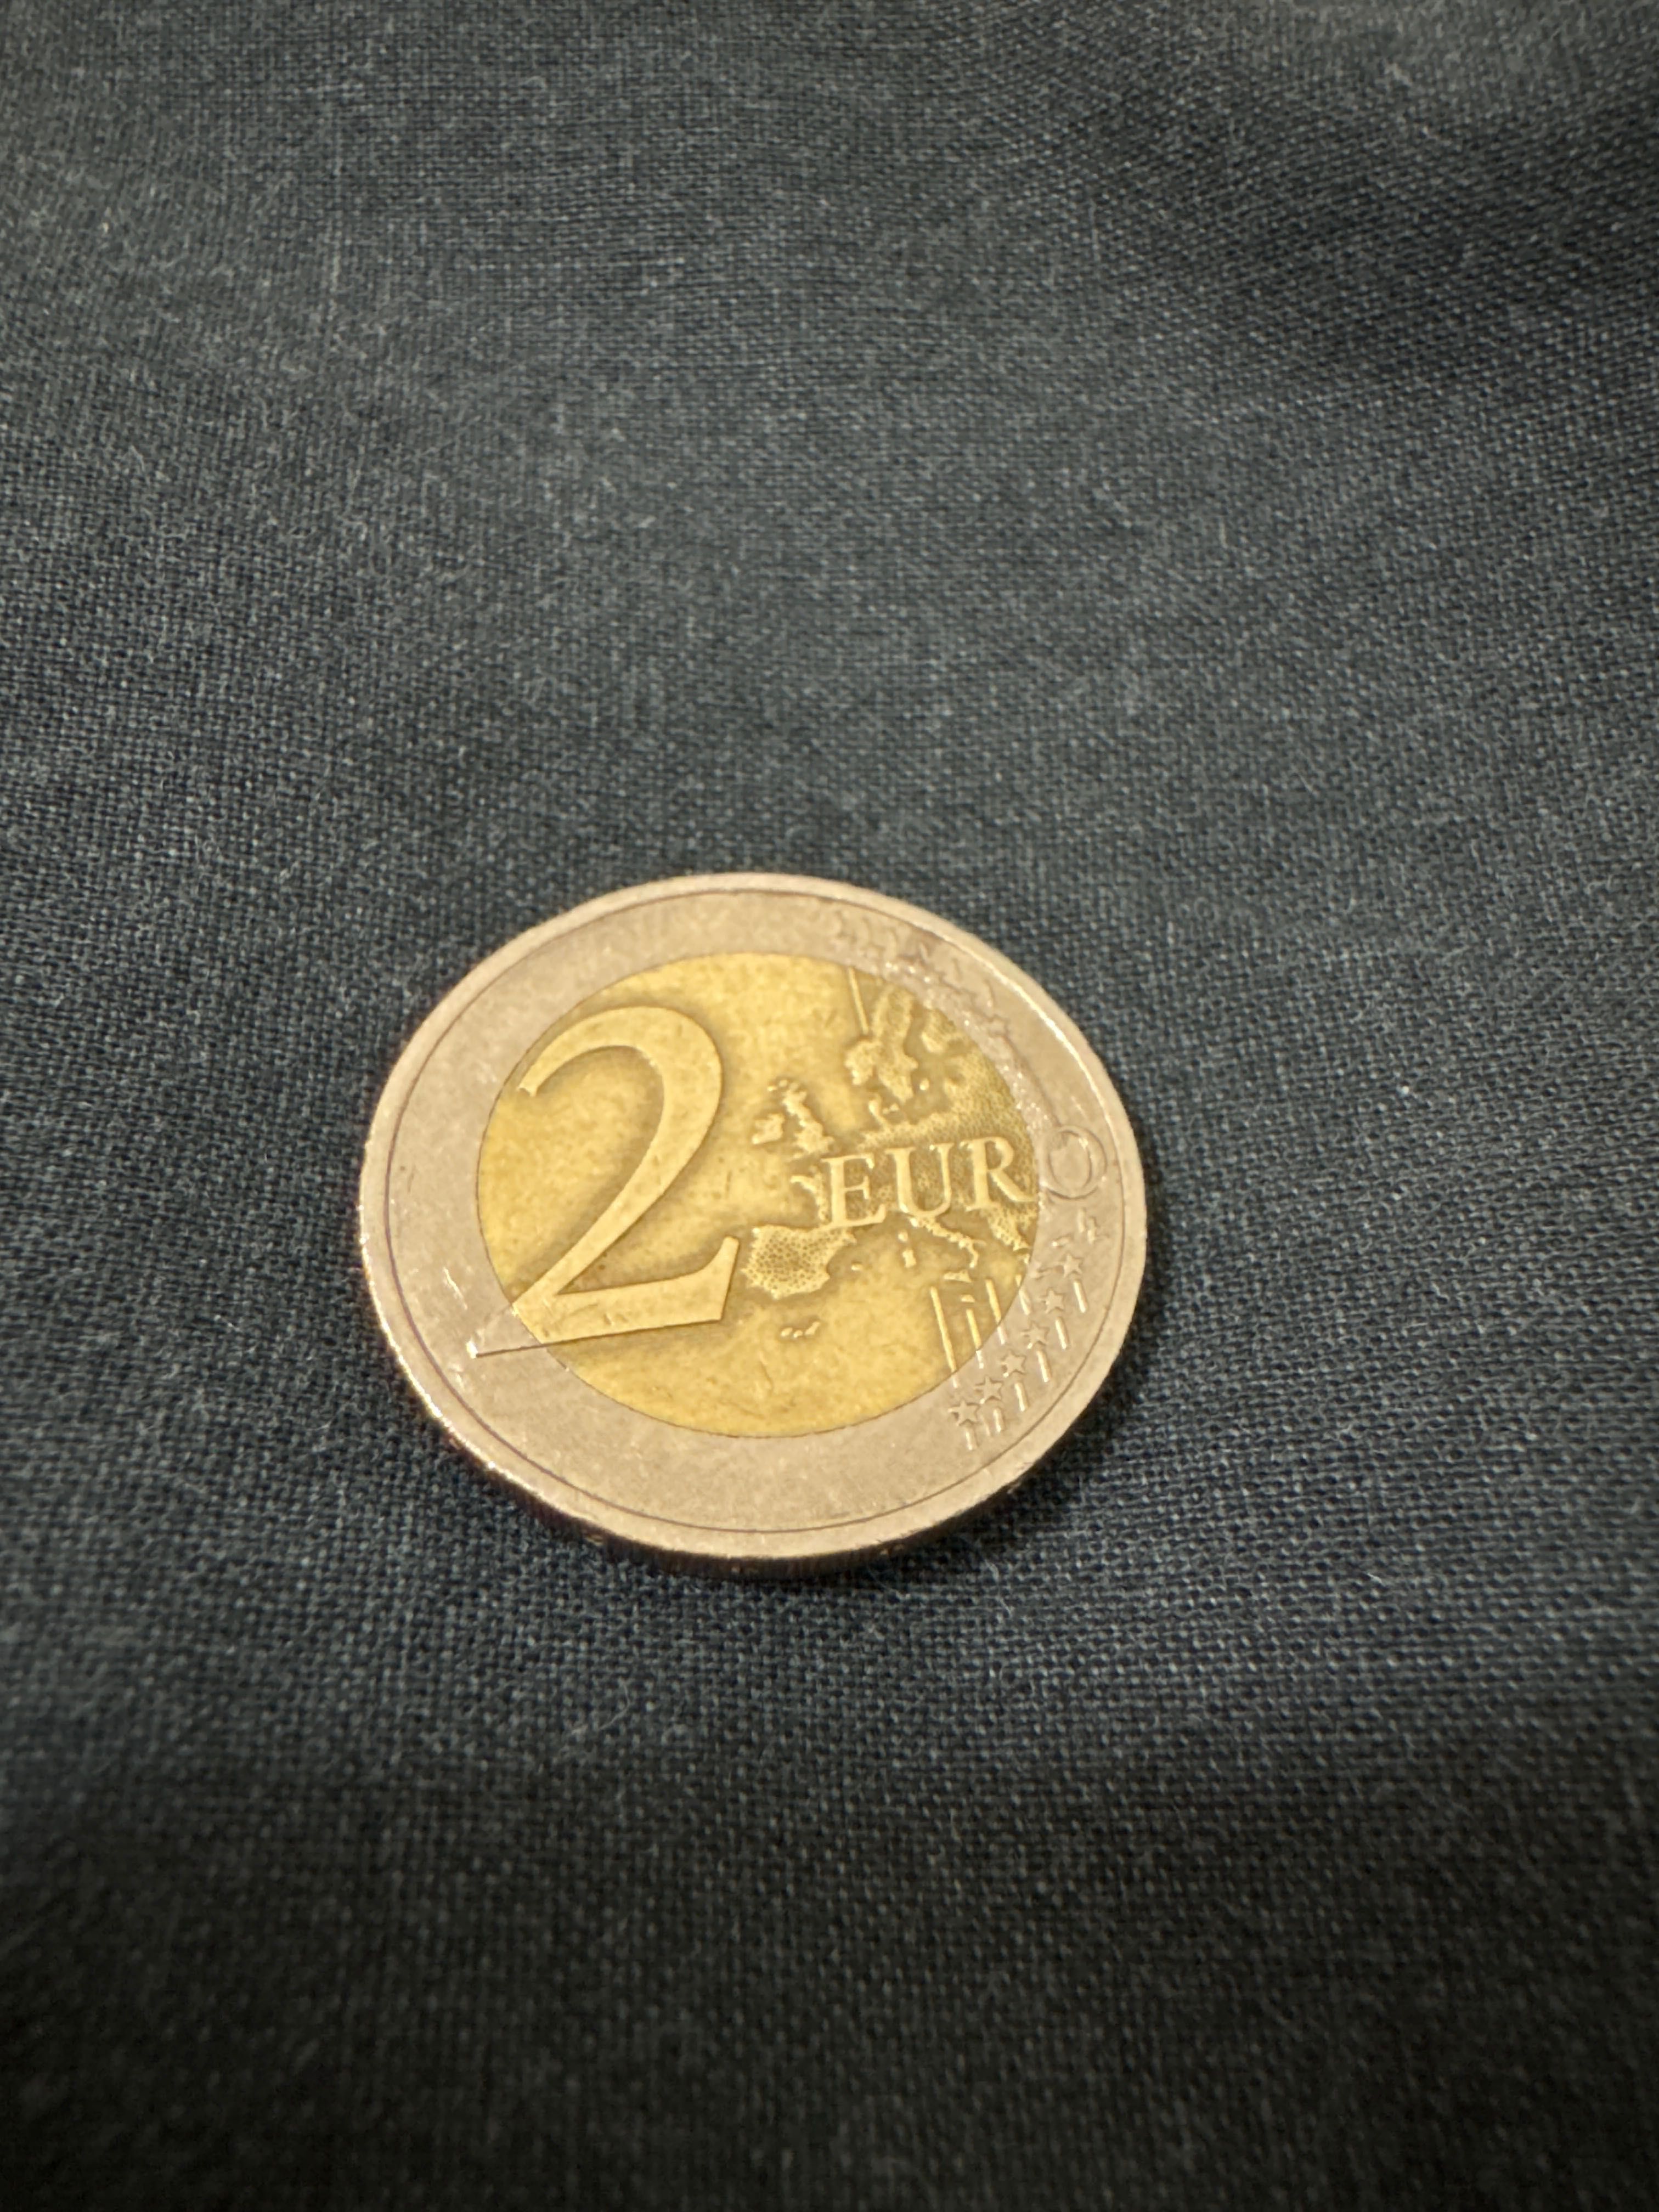 moeda rara francesa